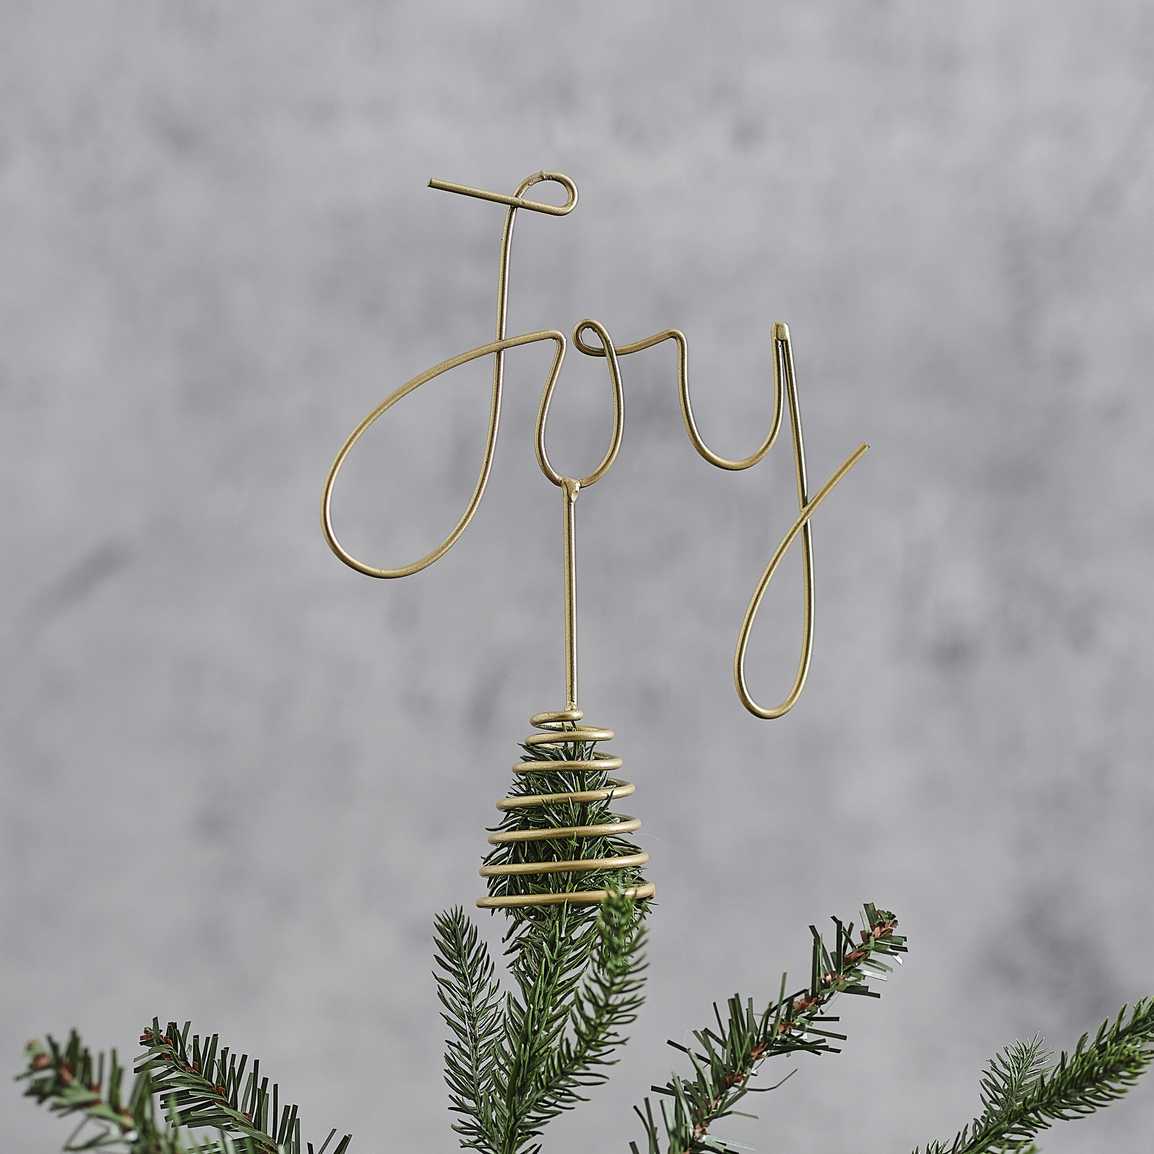 Joy Christmas Tree Topper